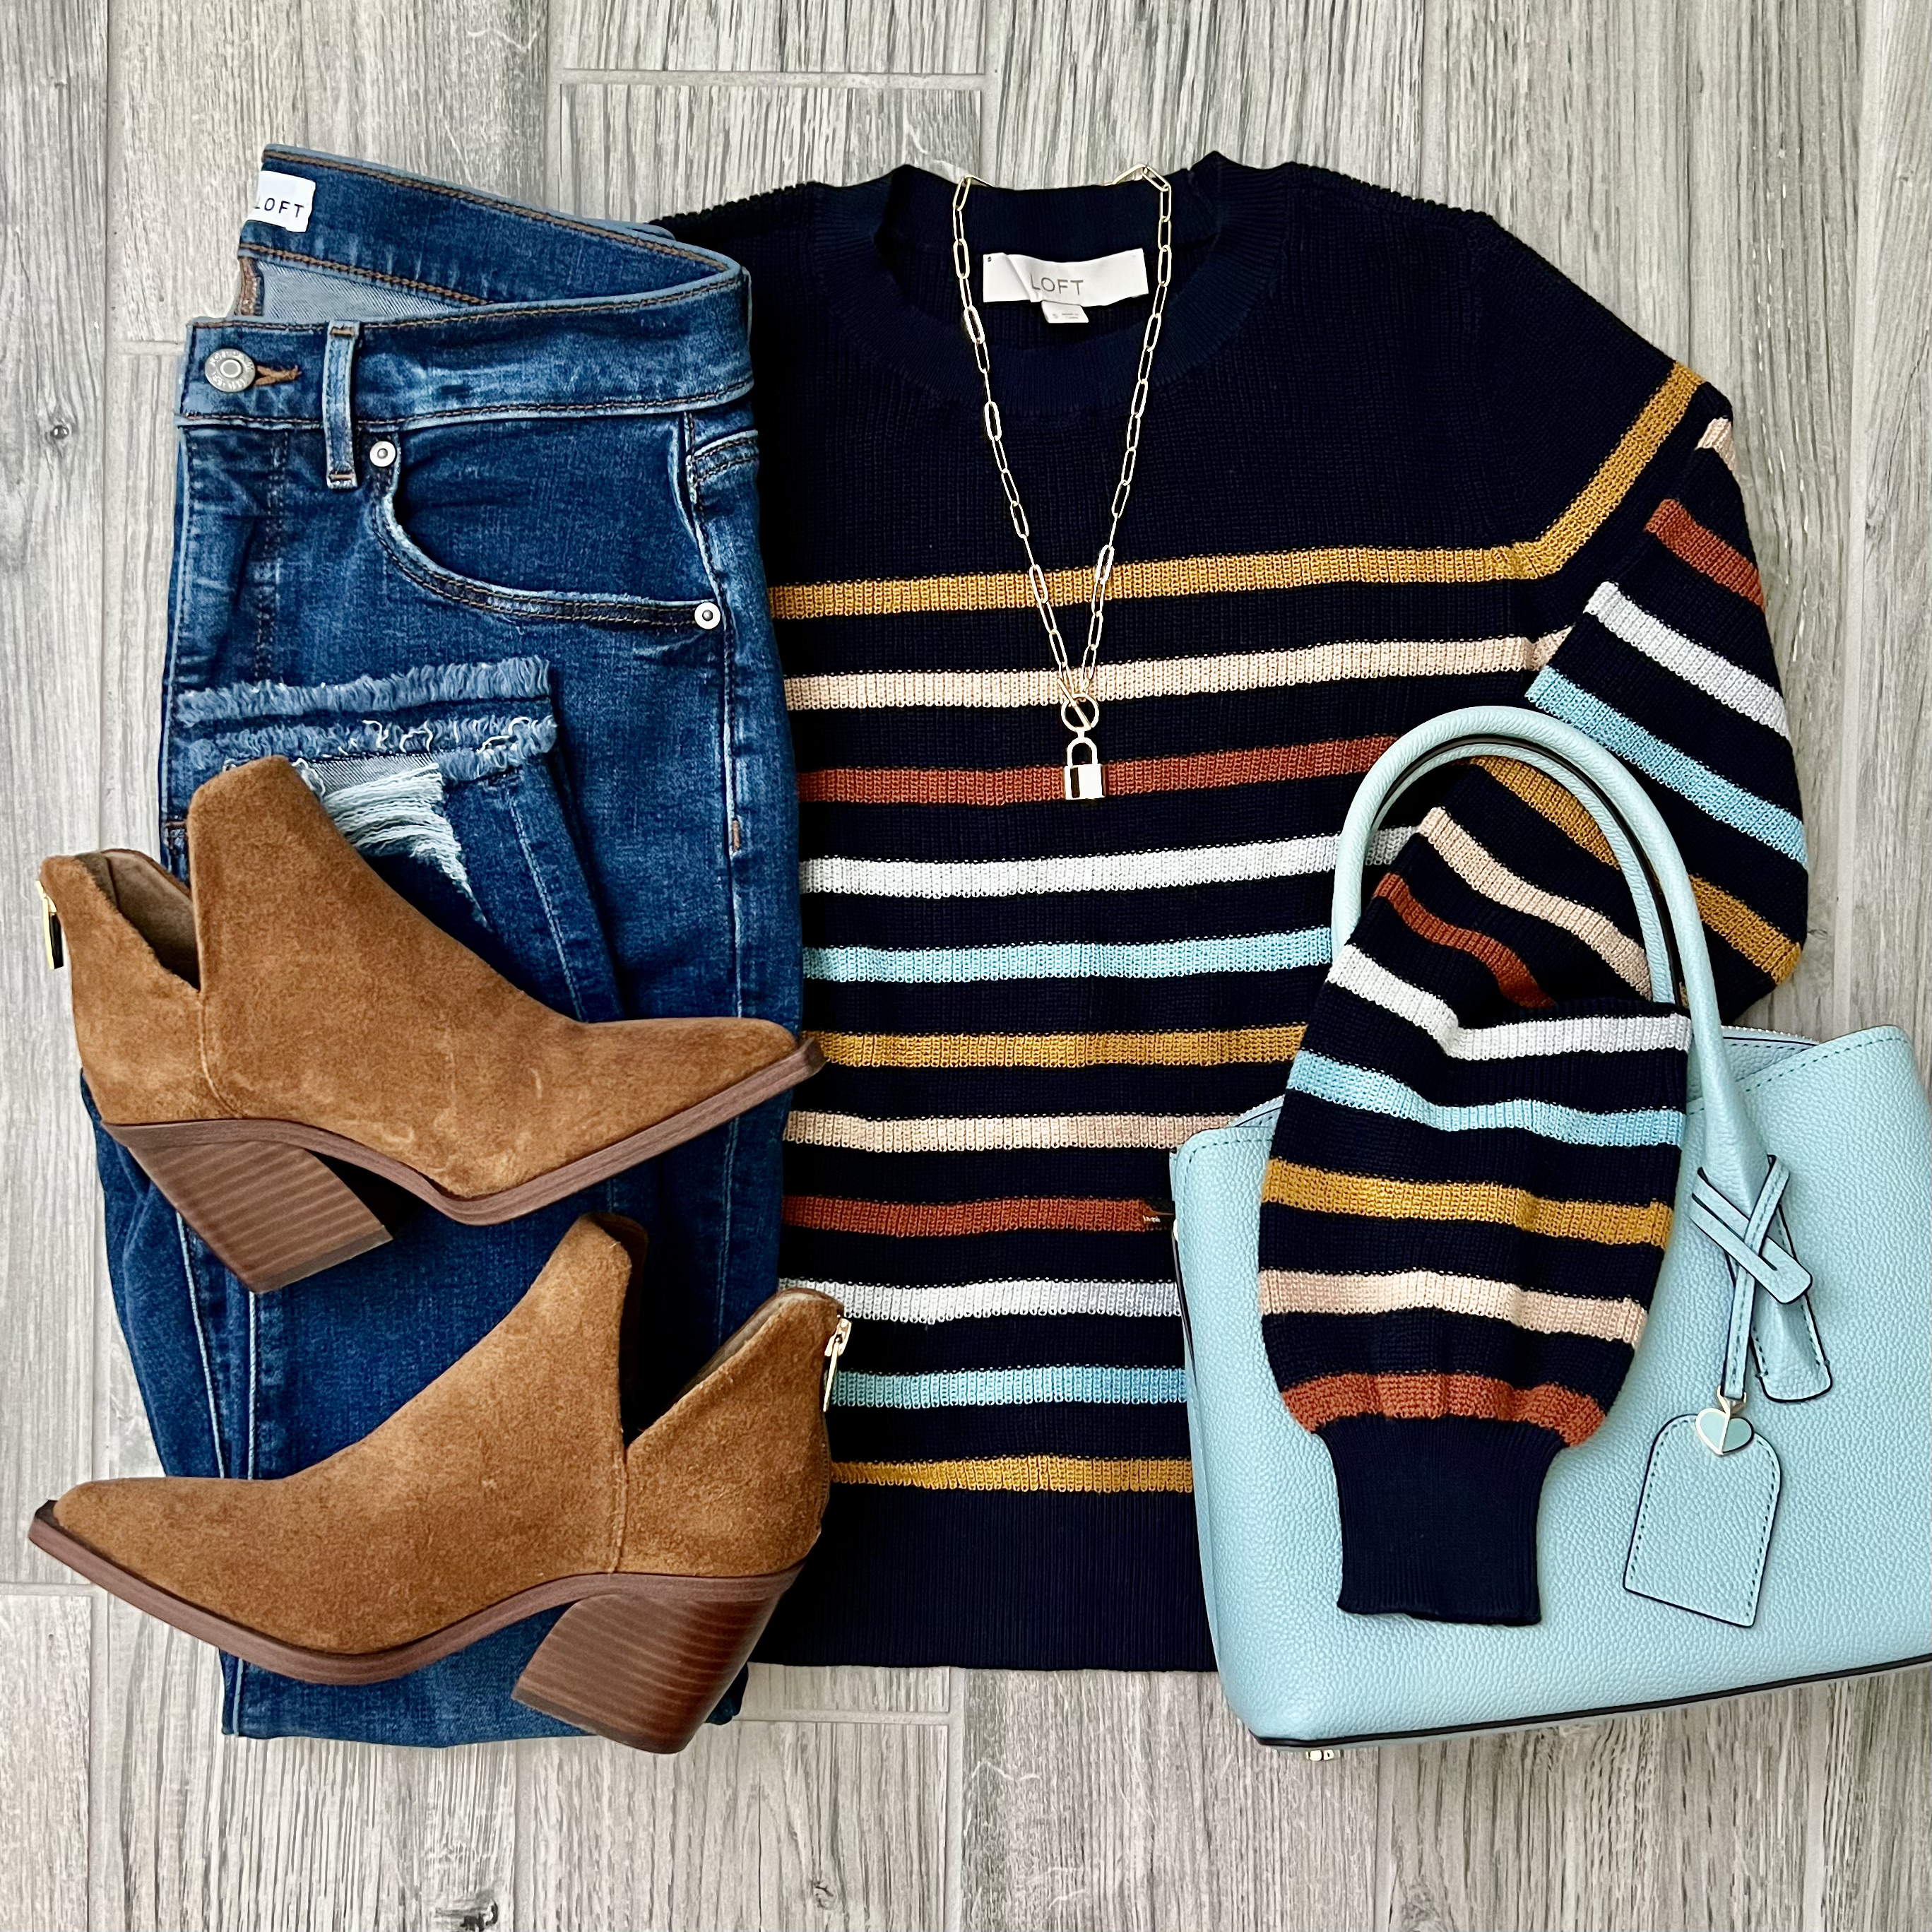 LOFT striped sweater